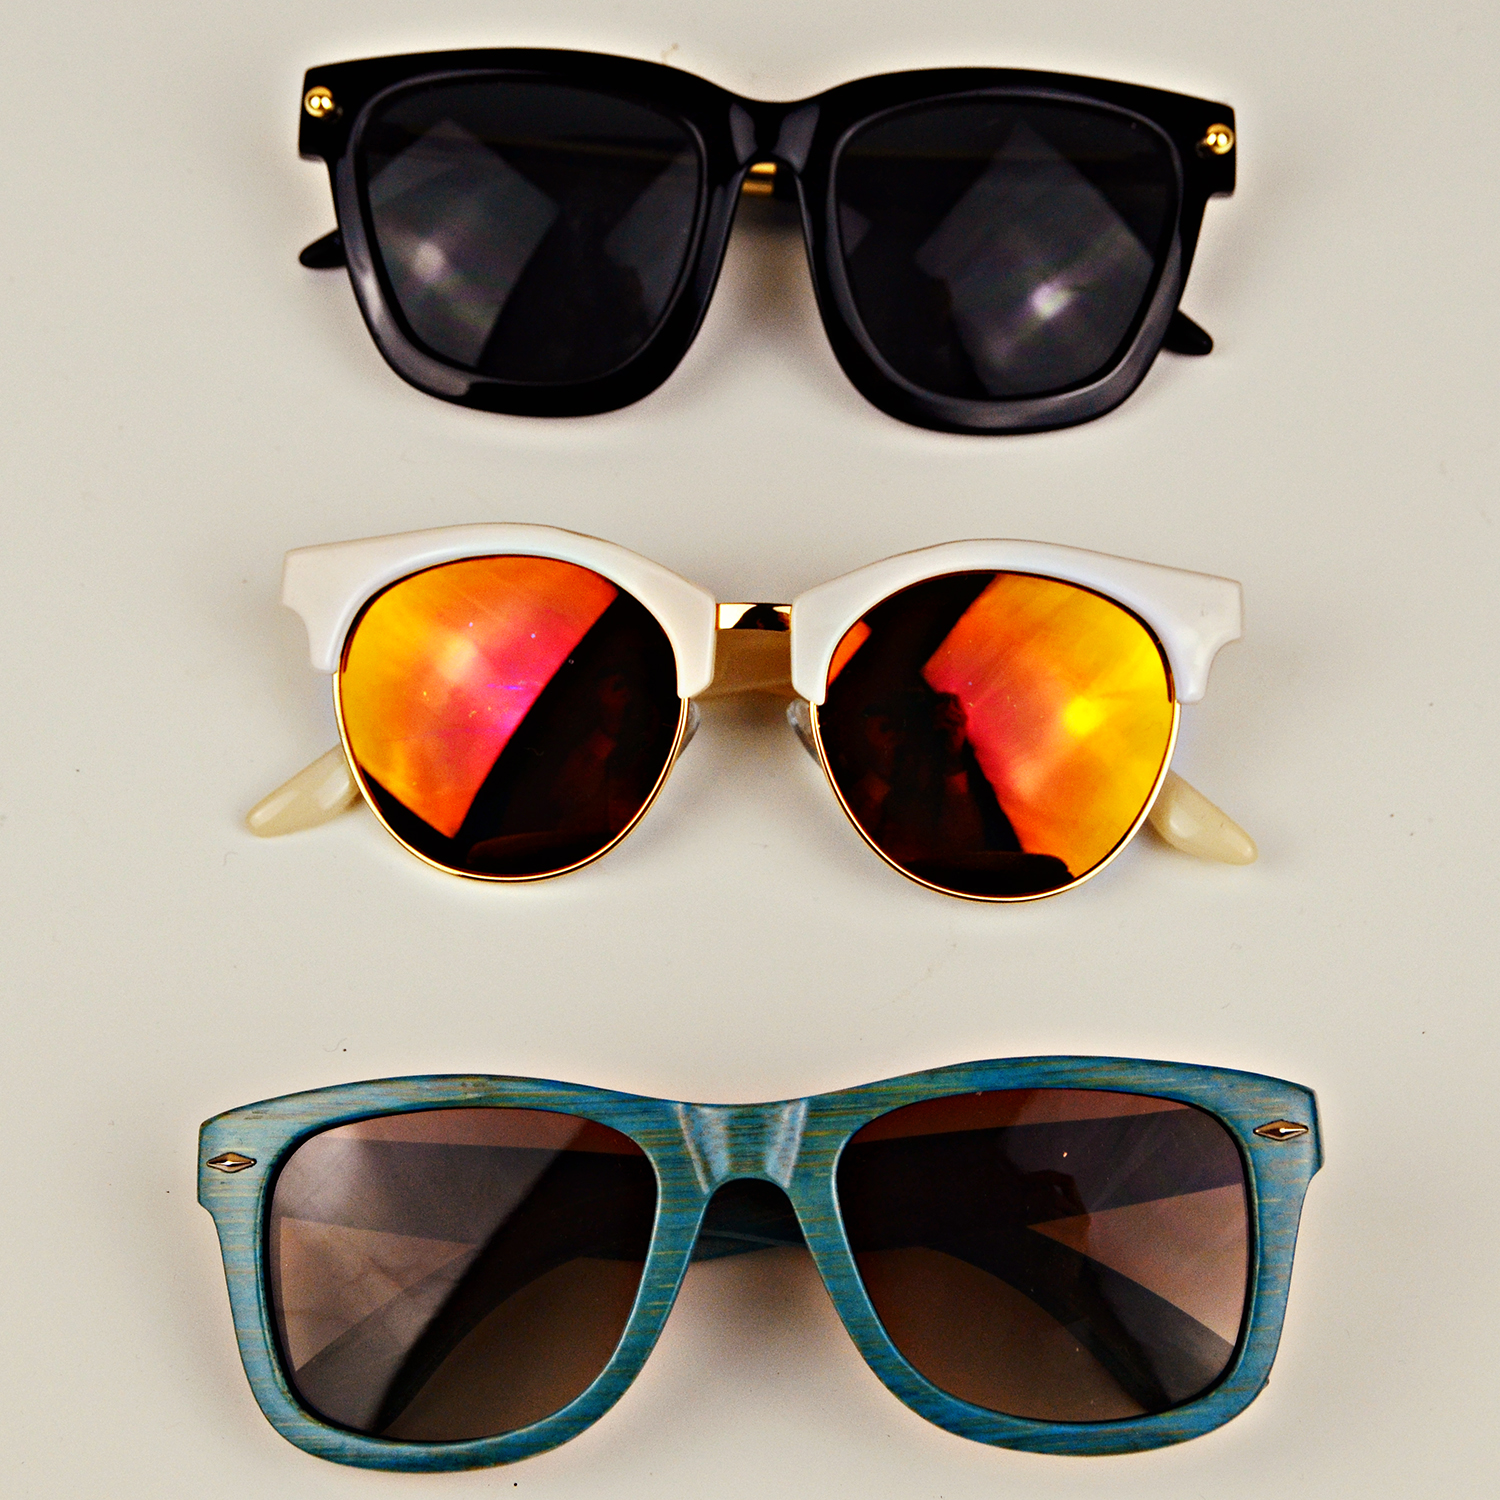 Polette Sunglasses